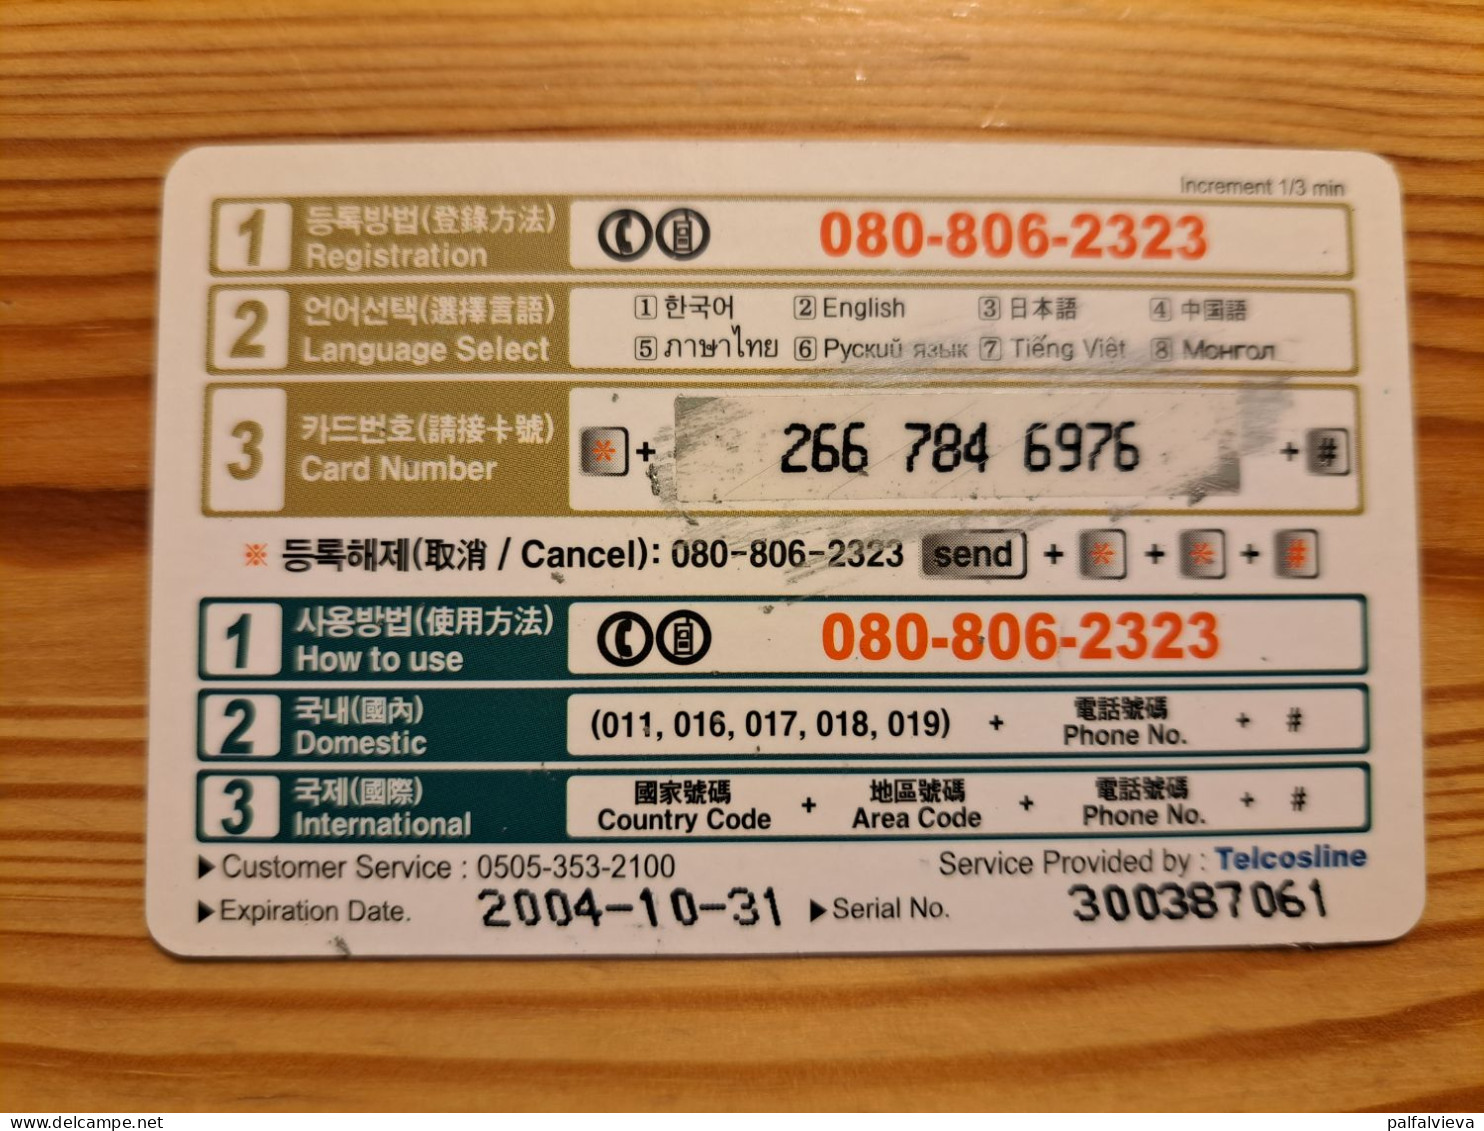 Prepaid Phonecard South Korea, Sense Mobile - Korea (Zuid)